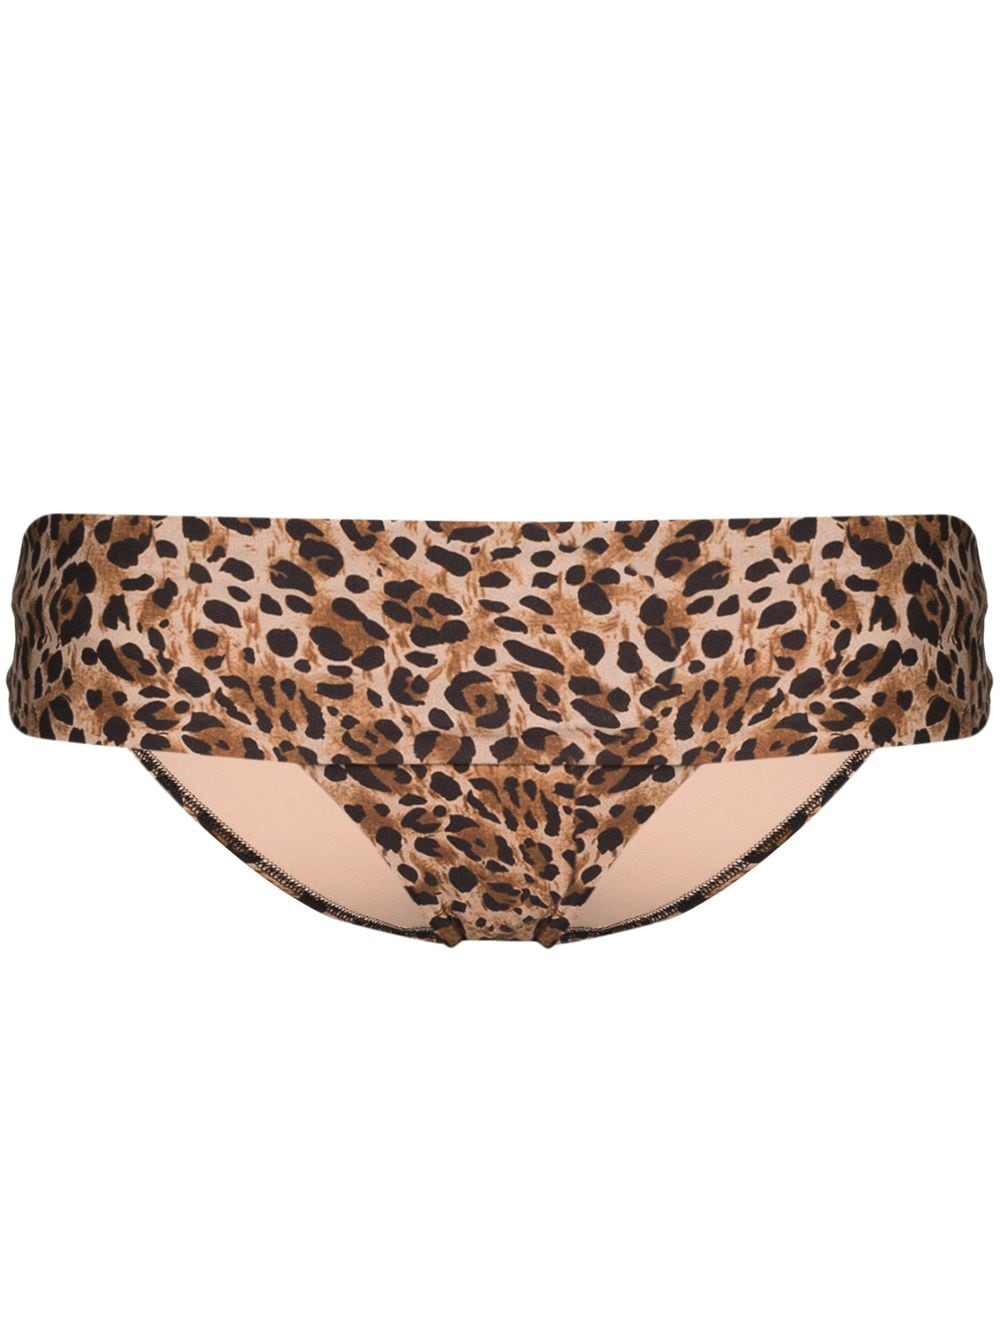 фото Melissa odabash плавки бикини provence с леопардовым принтом